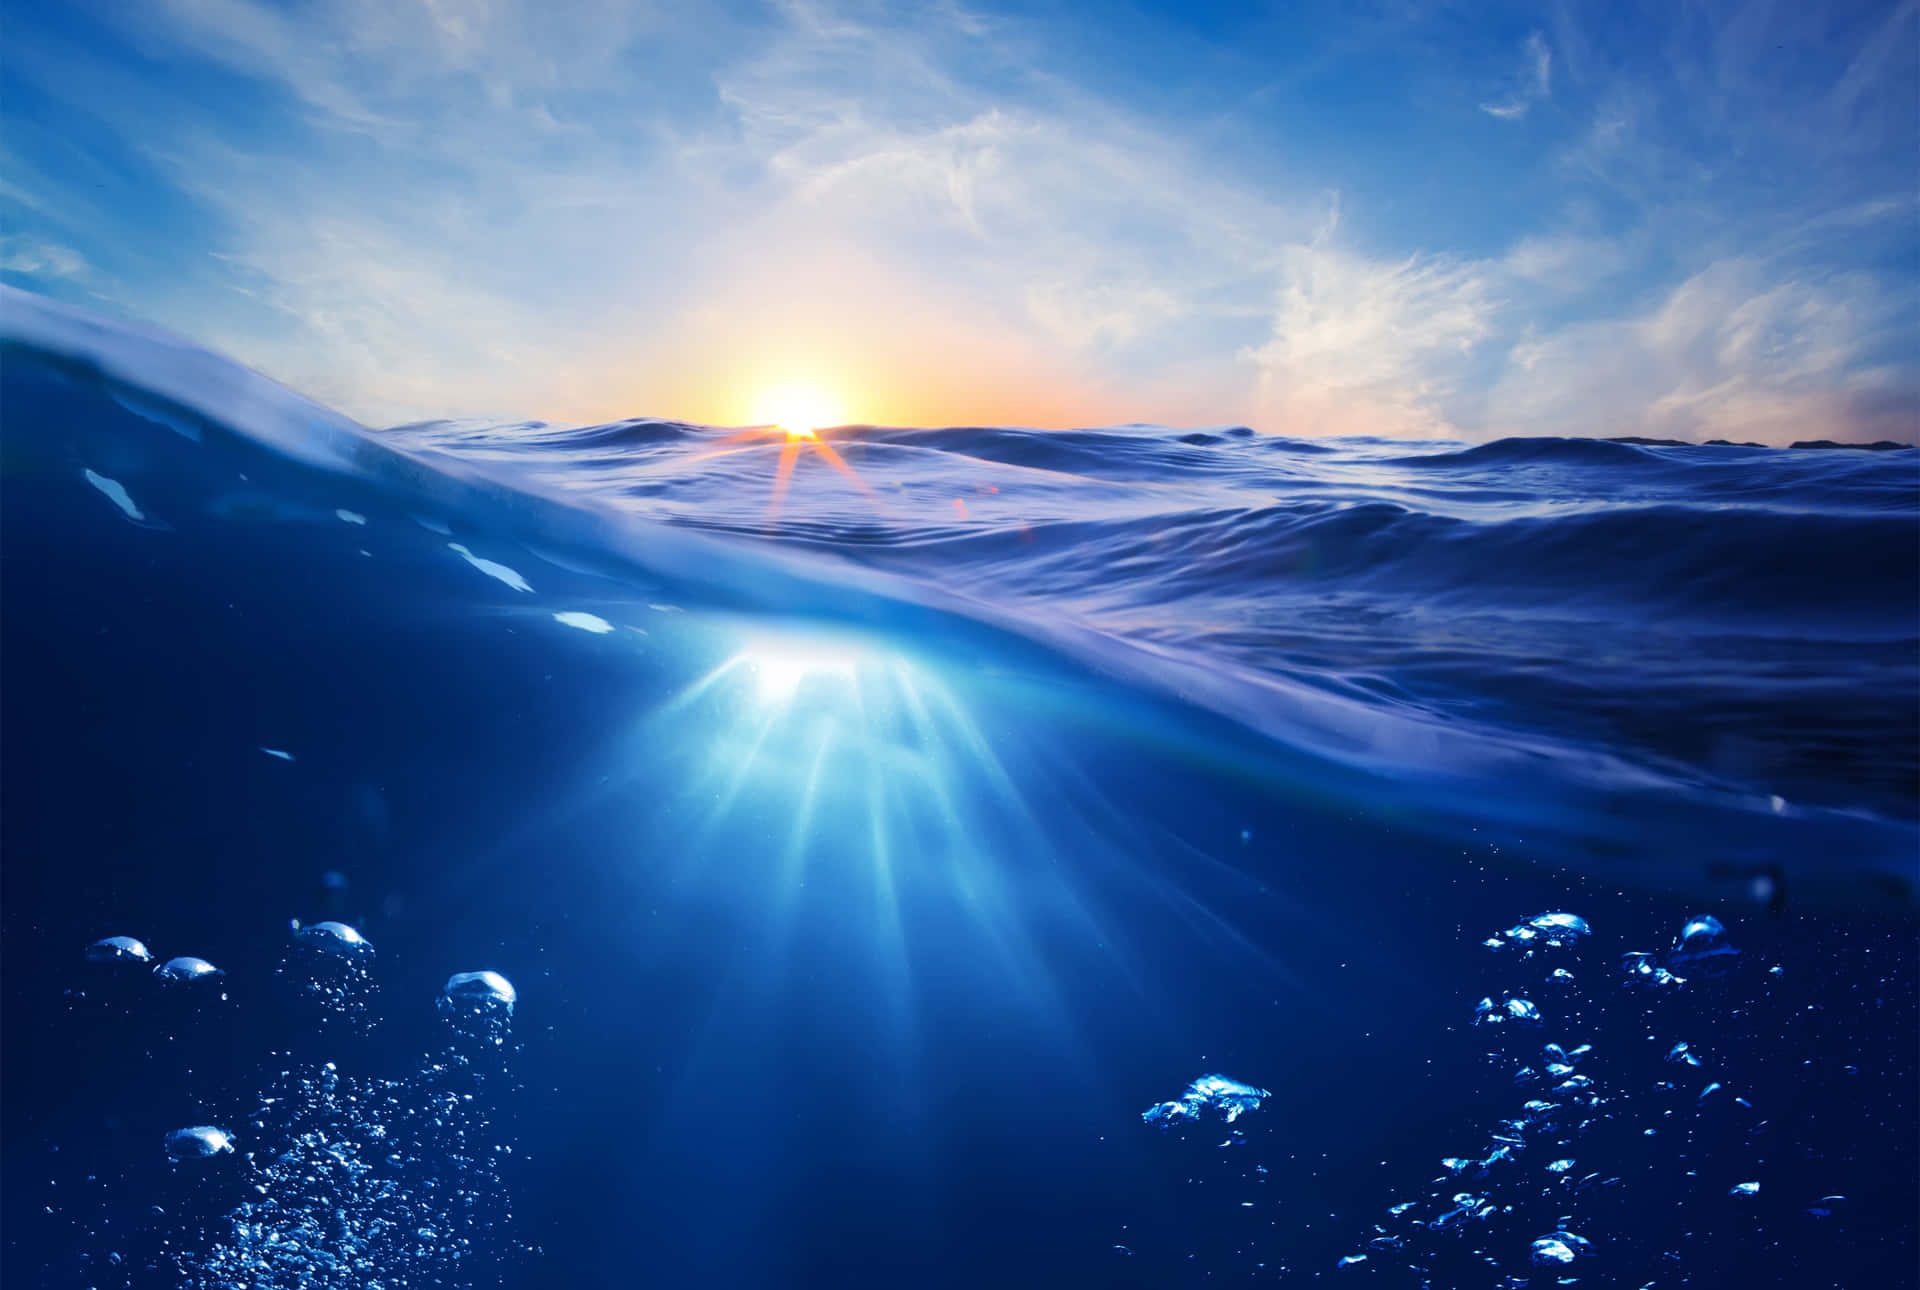 Underwater Ocean And Sunlight Background